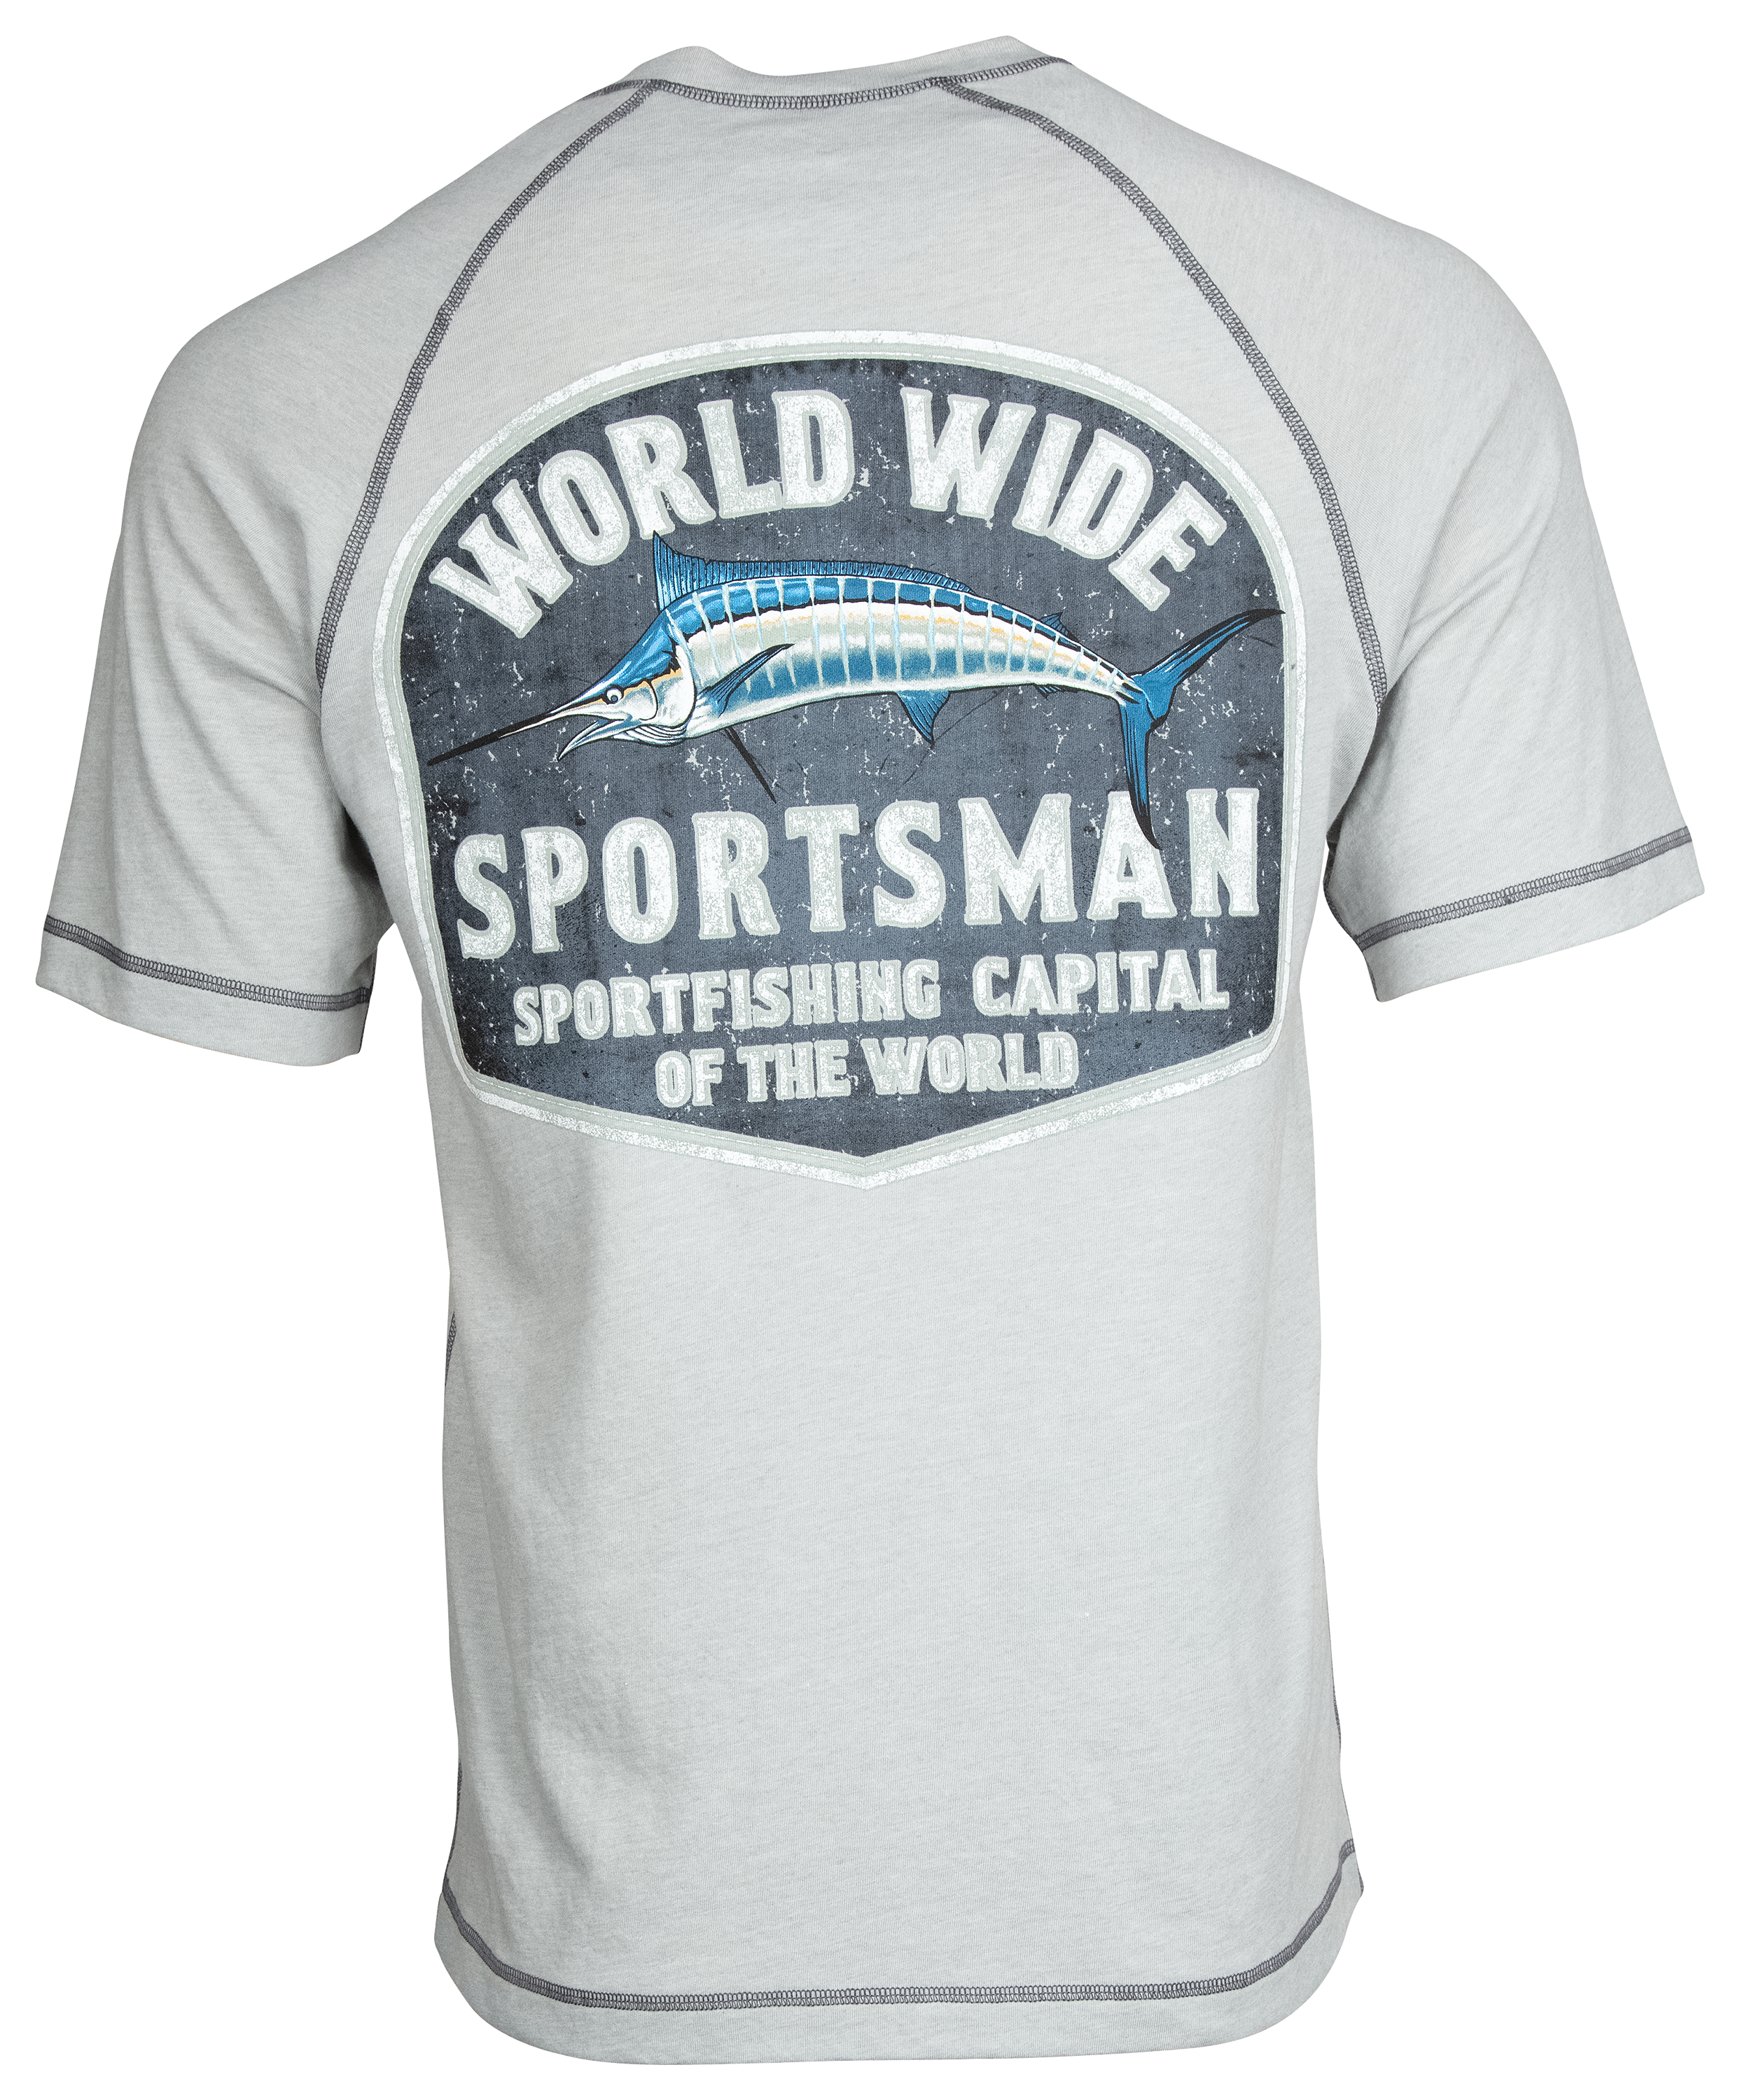 World Wide Sportsman Vintage Sport Fishing Capital Graphic Short-Sleeve Crew Neck T-Shirt for Men - Light Gray - M